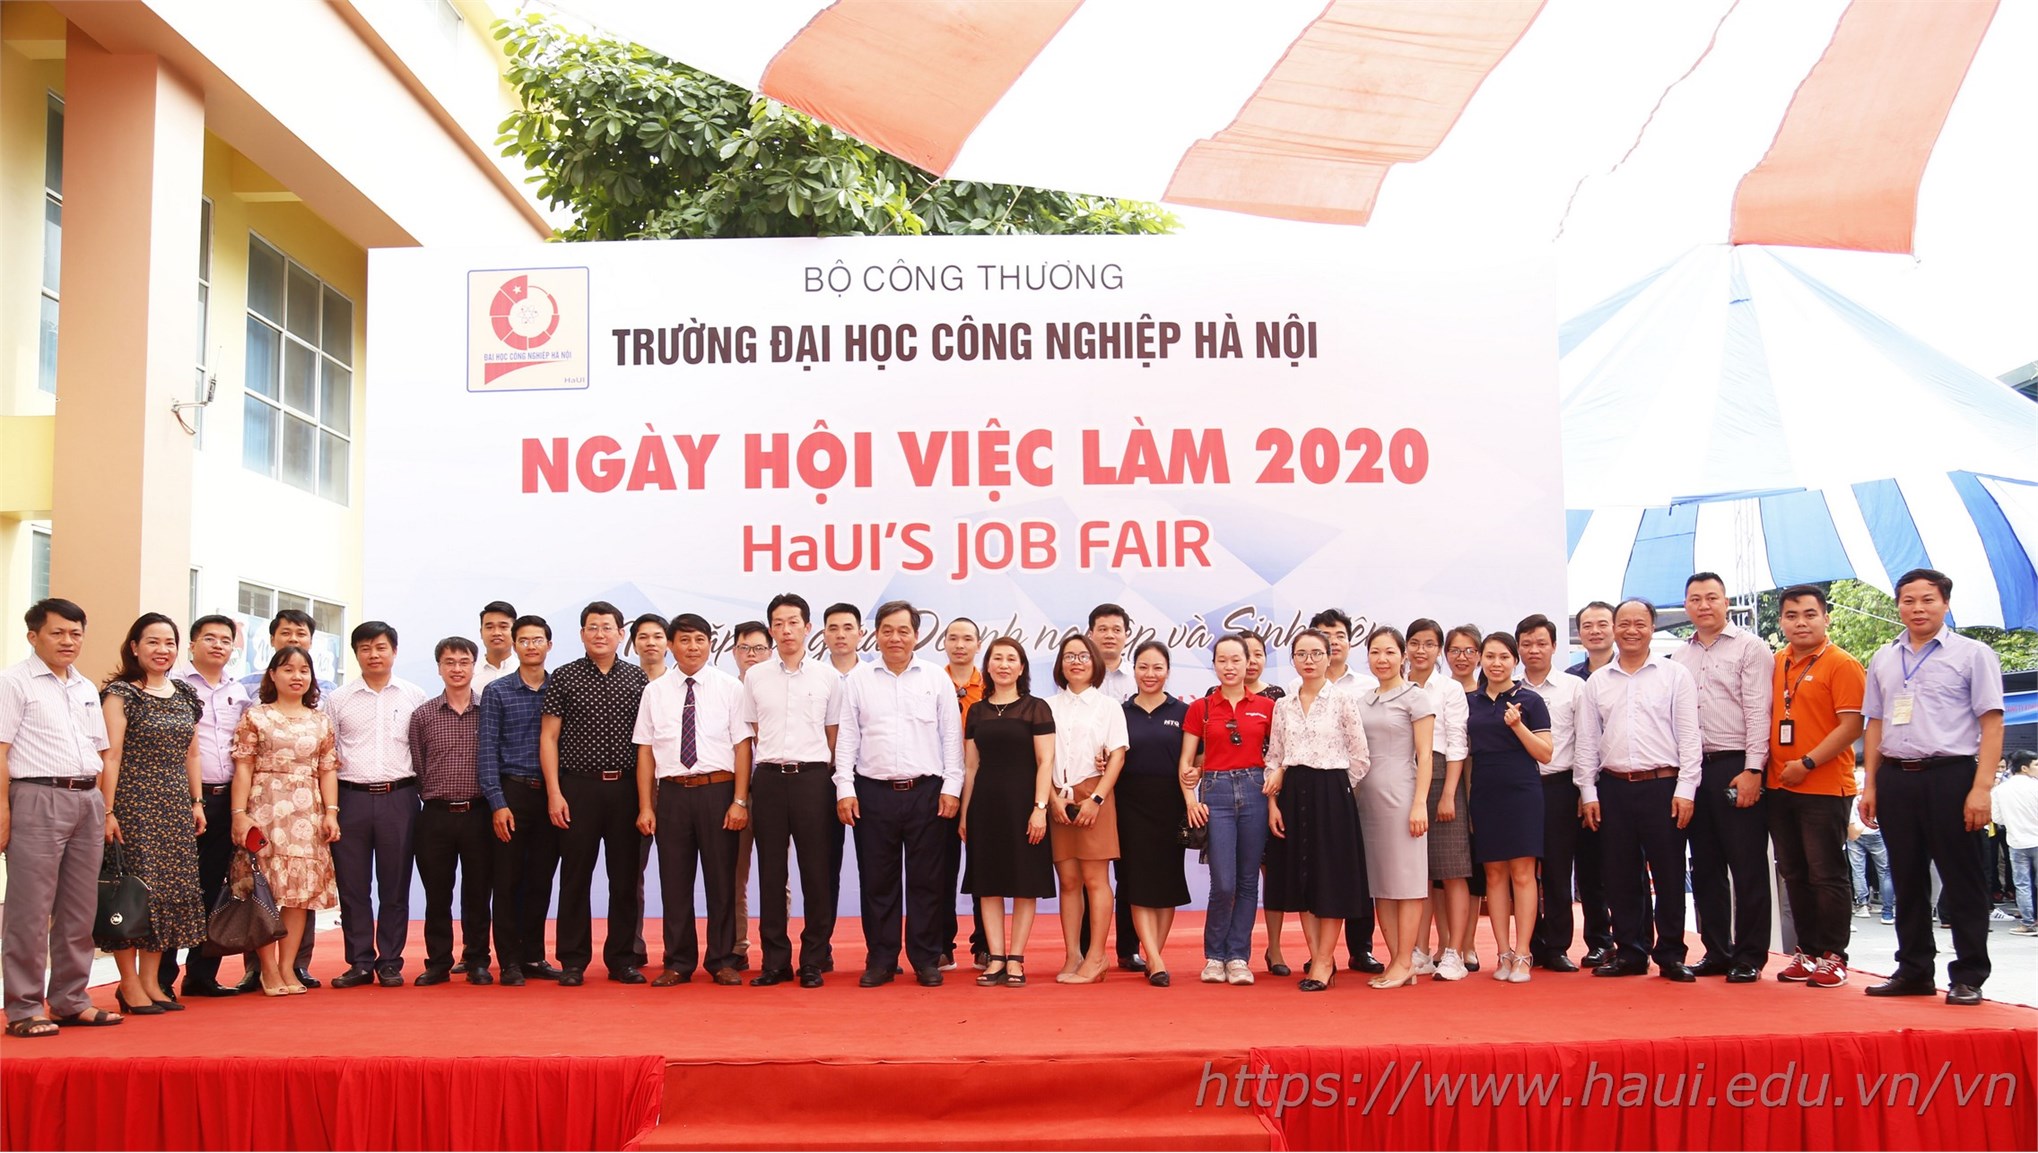 2.000 jobs for students at the HaUI Job Fair 2020 